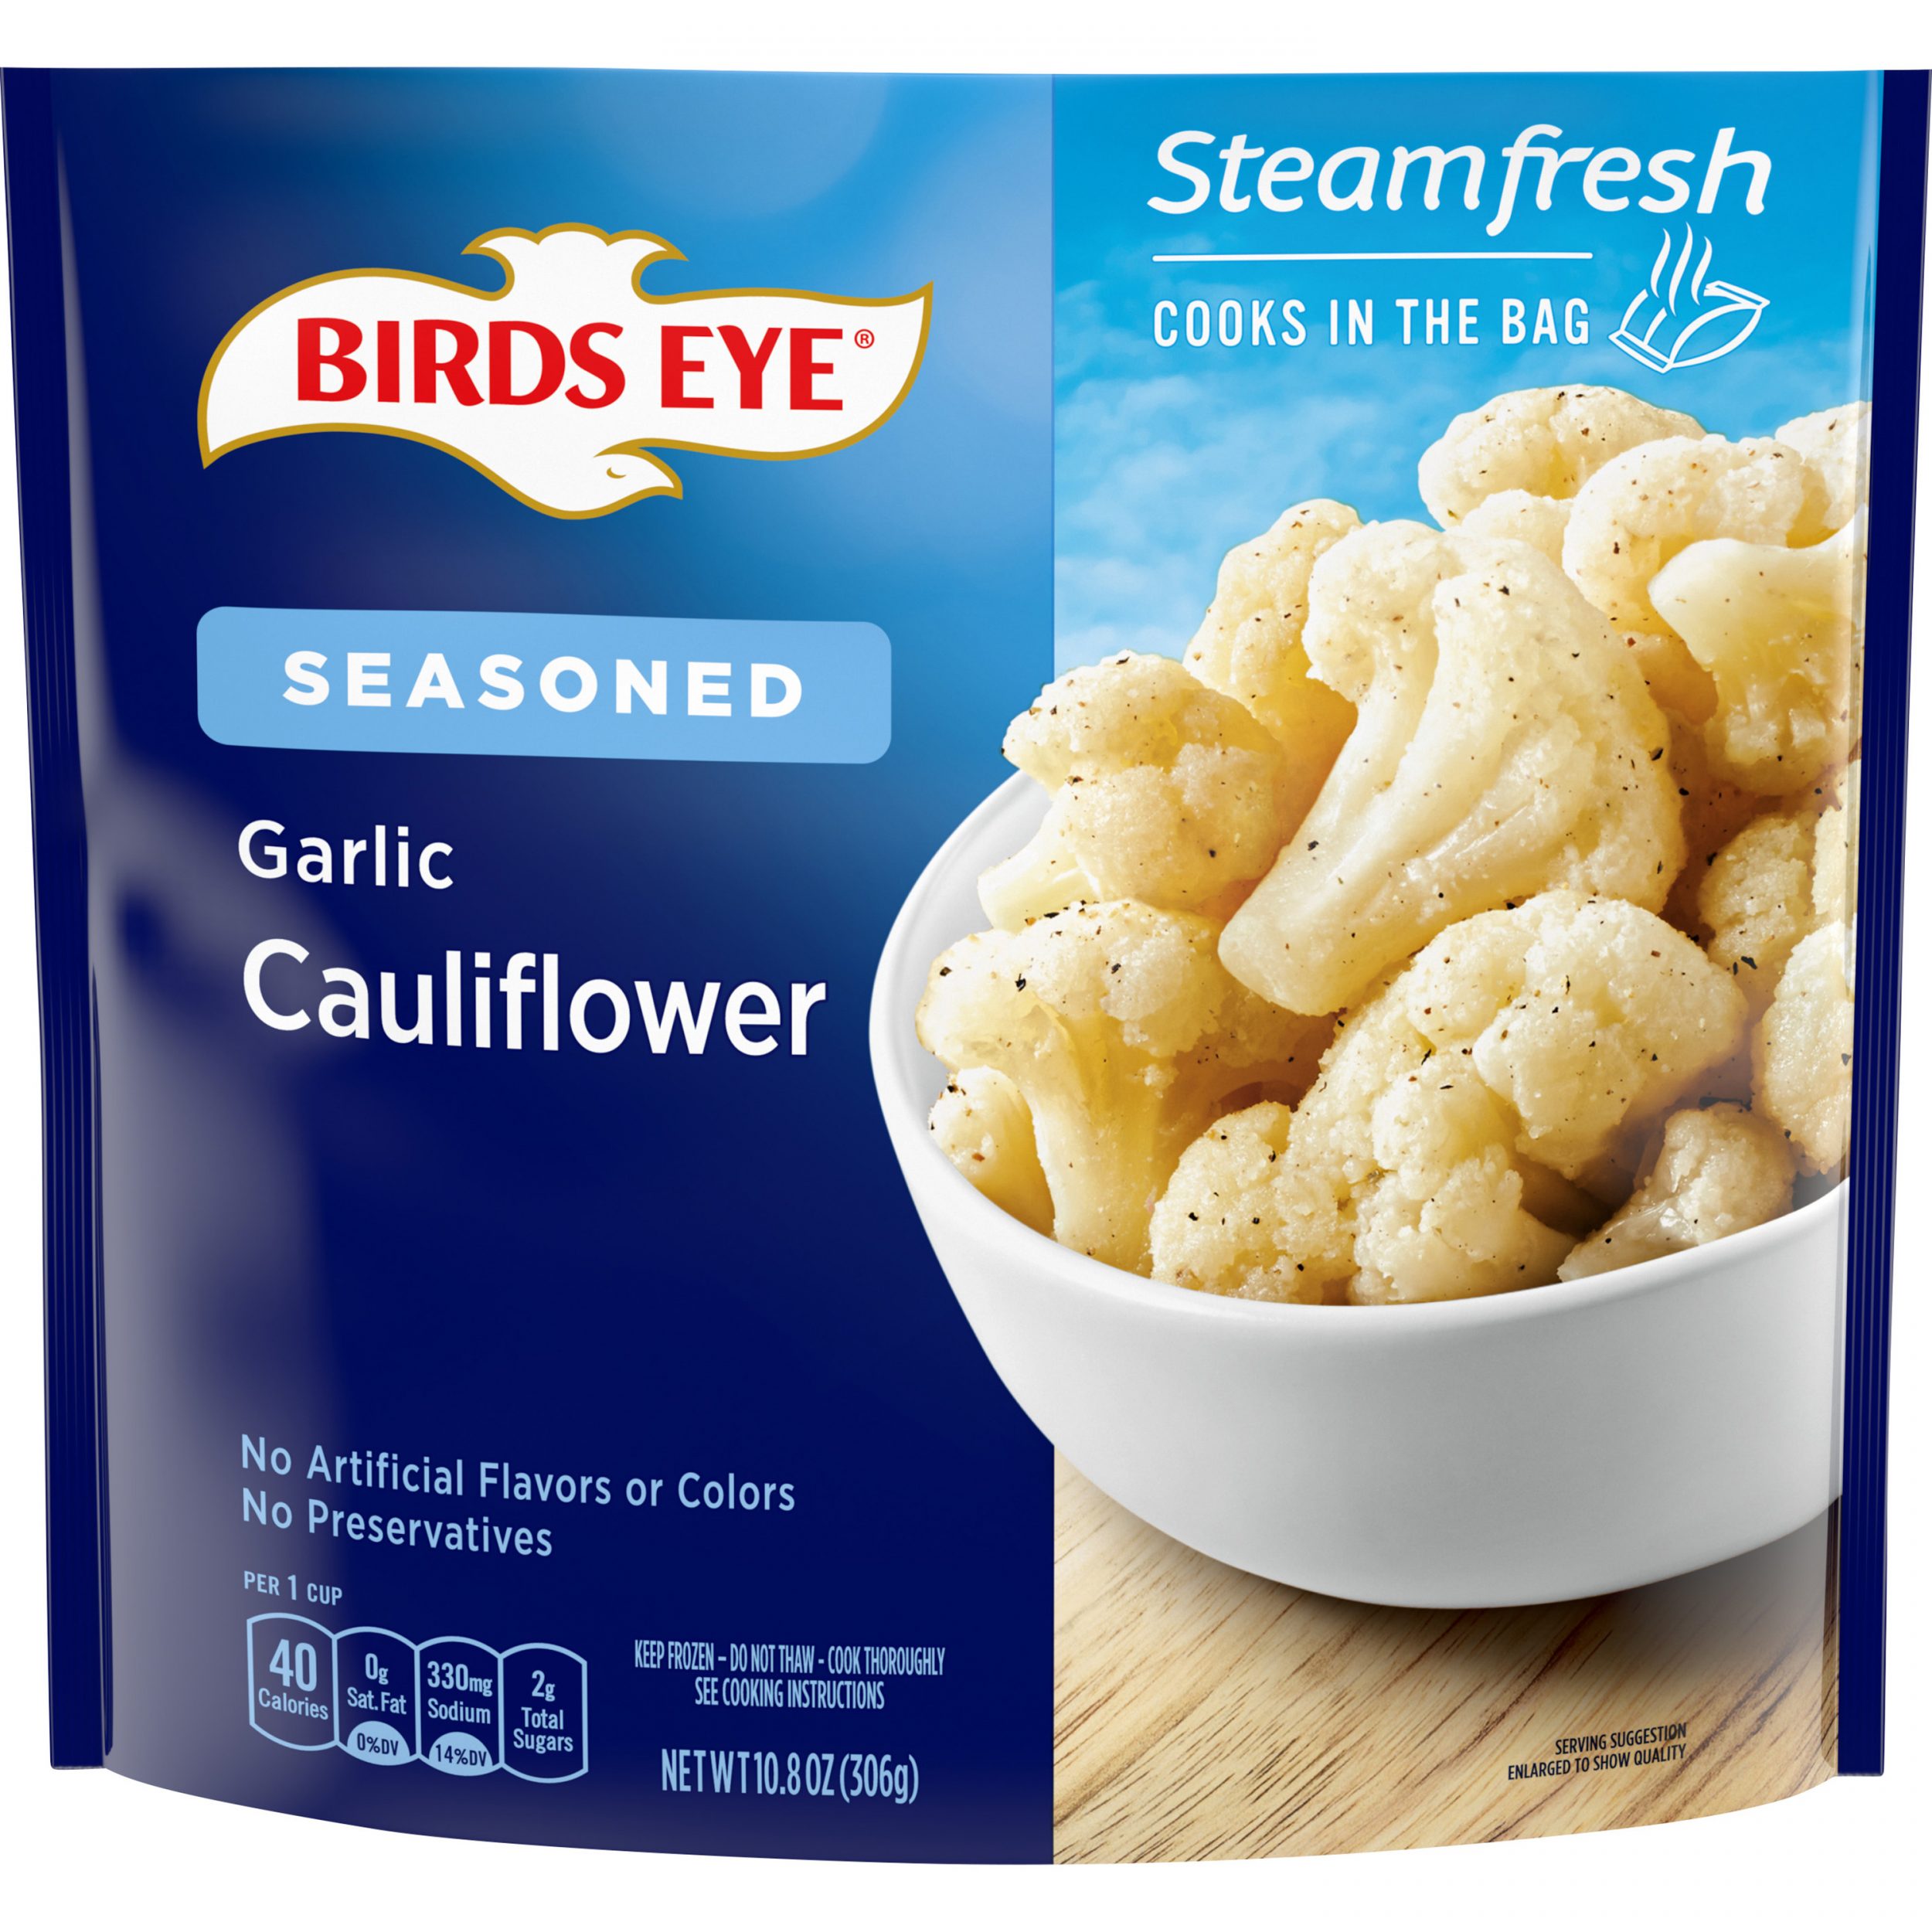 Birds Eye Steamfresh Chef’s Favorites Lightly Seasoned Garlic Cauliflower